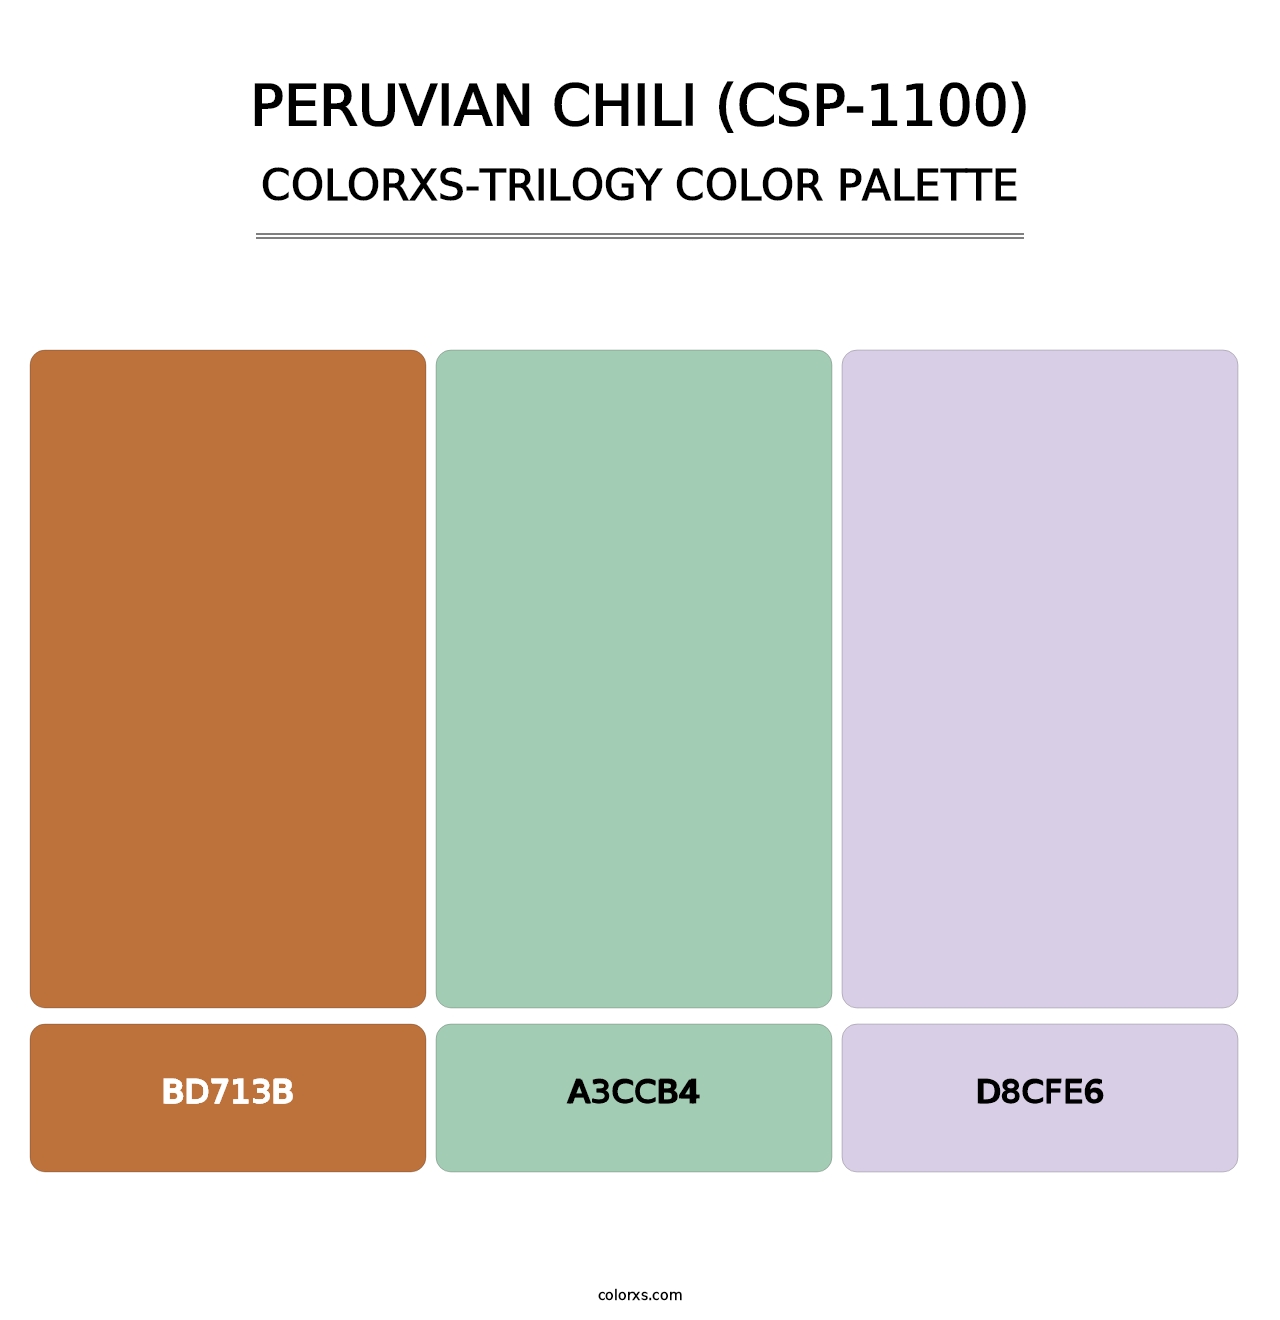 Peruvian Chili (CSP-1100) - Colorxs Trilogy Palette